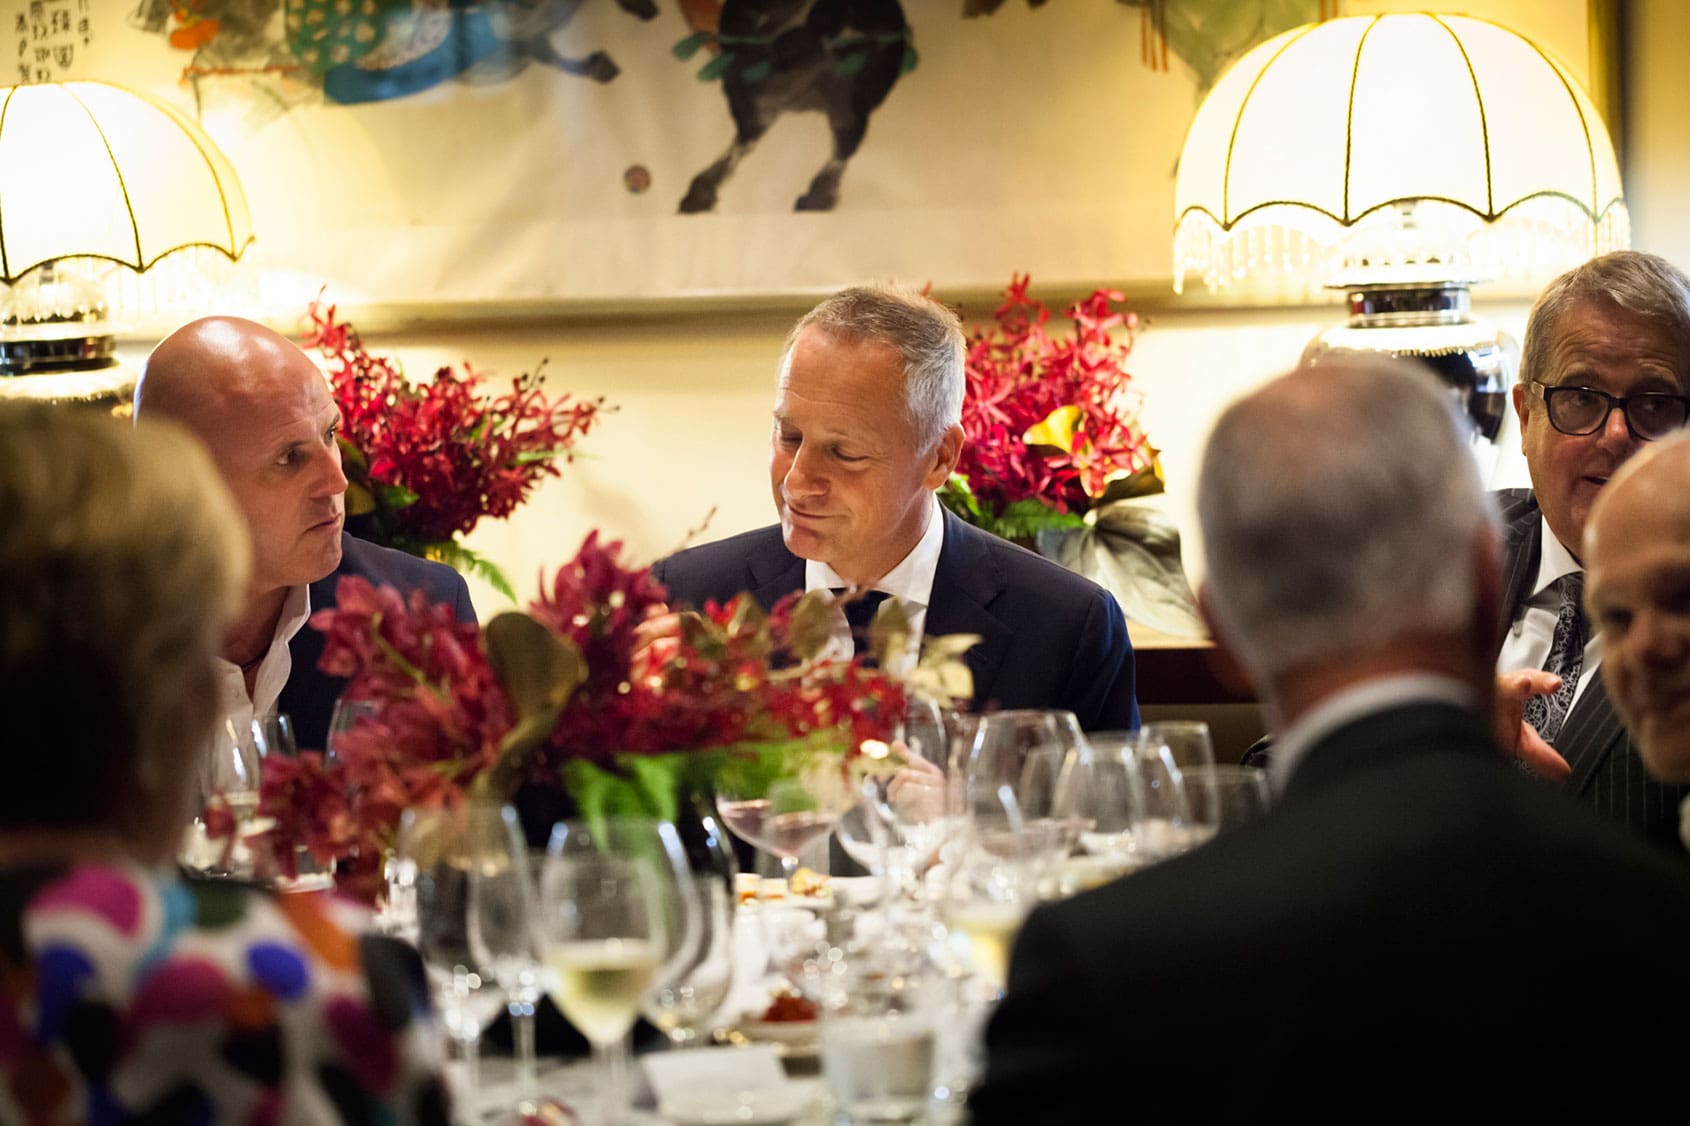 EVENT: Dinner with A. Lange & Söhne CEO Wilhelm Schmid